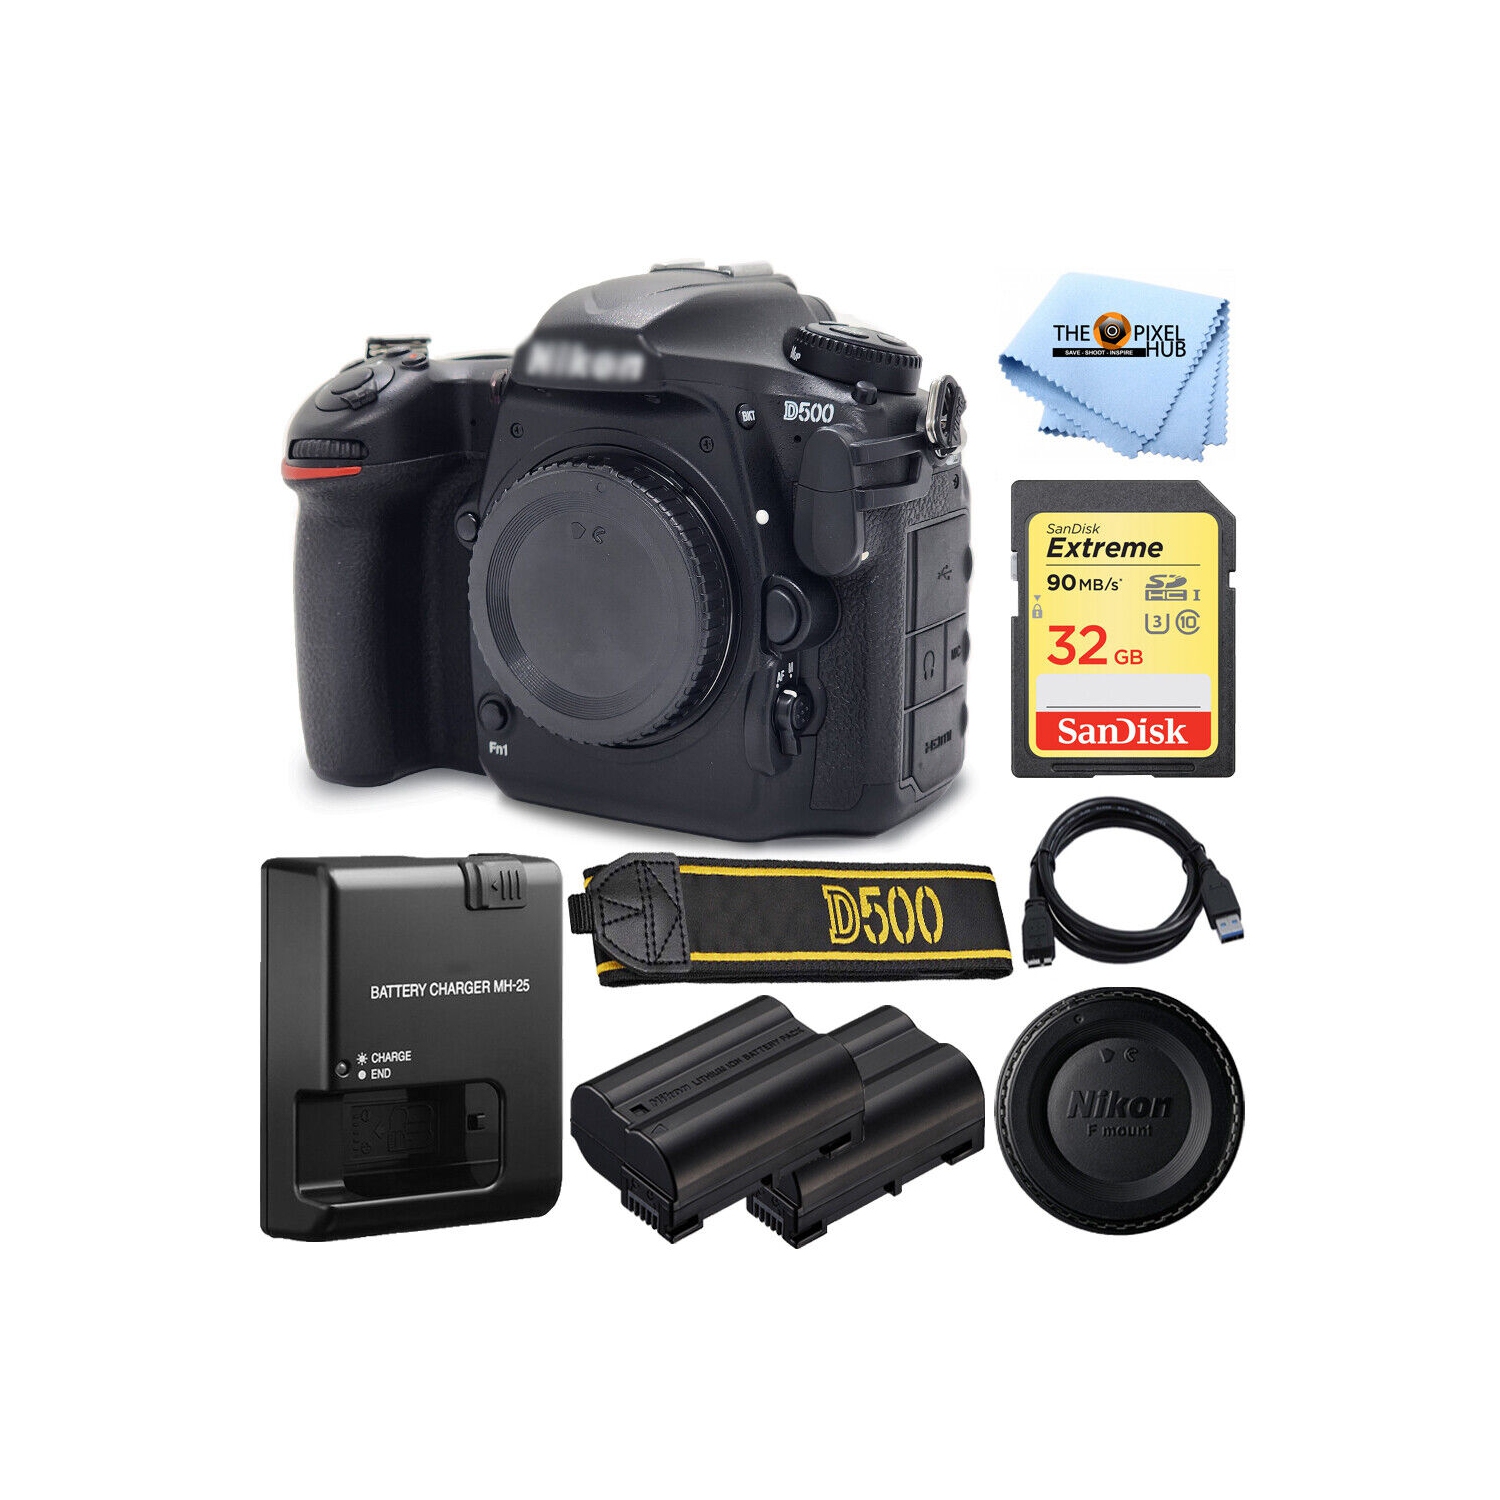 Nikon D500 20.9 MP 4K WiFi DSLR Camera (Body Only) + EXT BATT + Sandisk 32GB SD